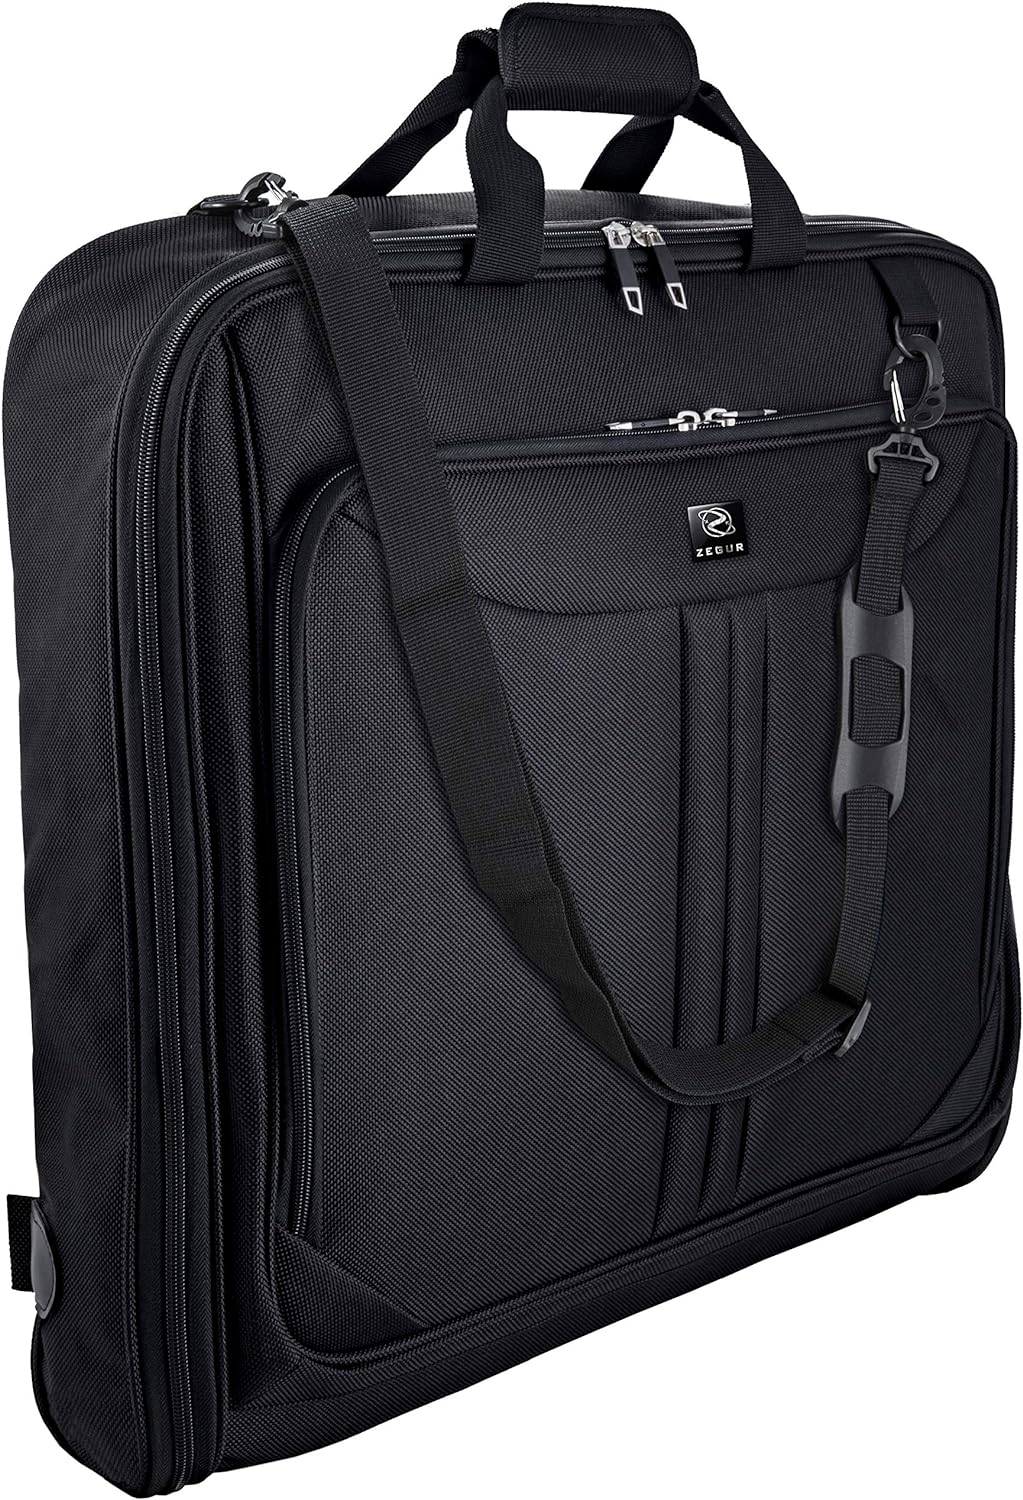 ZEGUR 40-Inch 3 Suit Carry on Garment Bag for Travel or Business Trips - Features an Adjustable Shoulder Strap and Multiple Organisation Pockets – Black